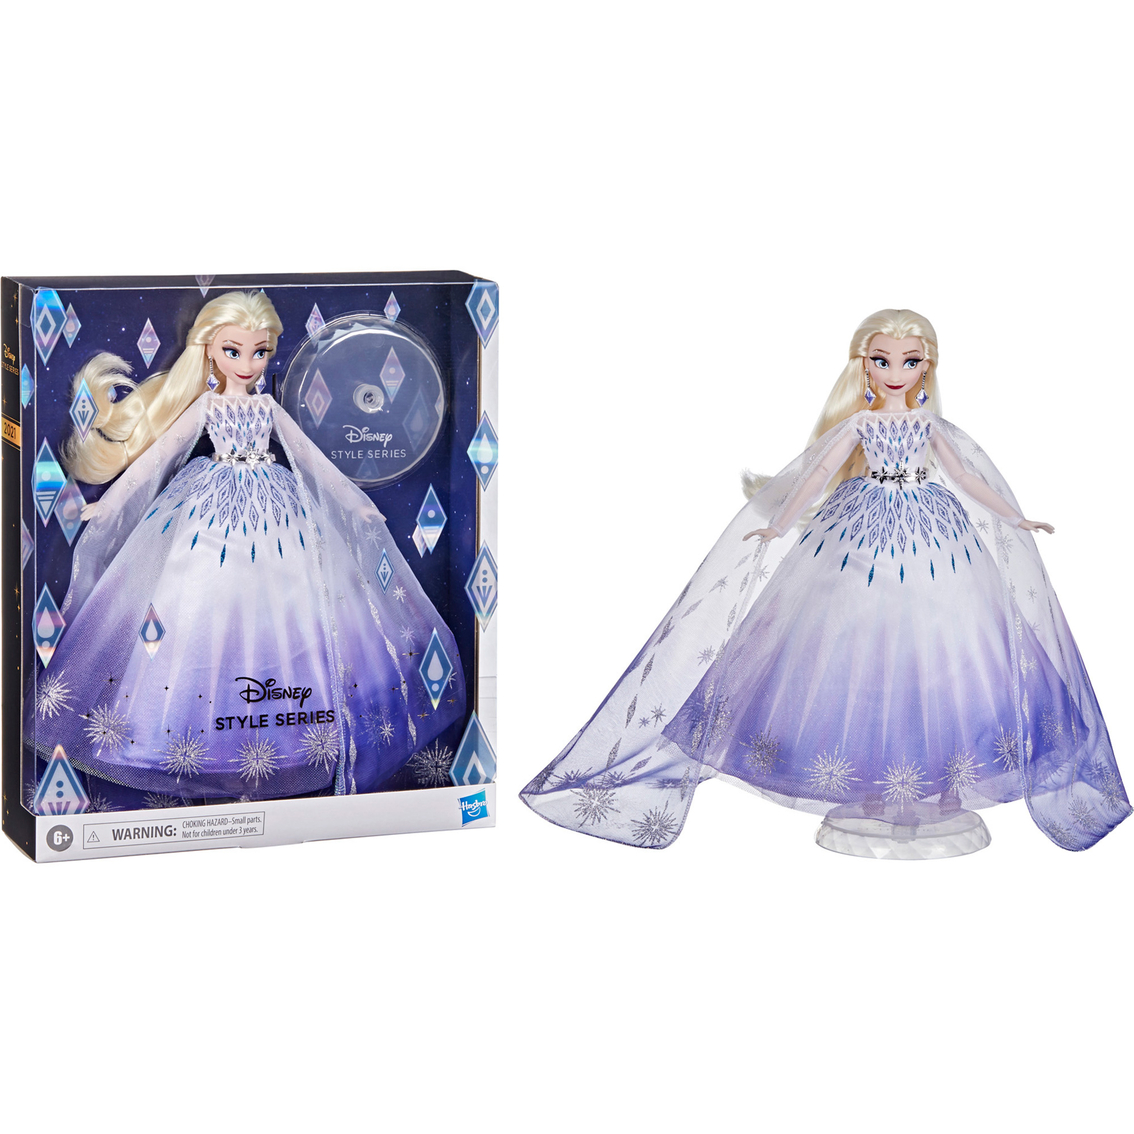 Disney Princess Style Series Holiday Elsa Doll - Image 2 of 2